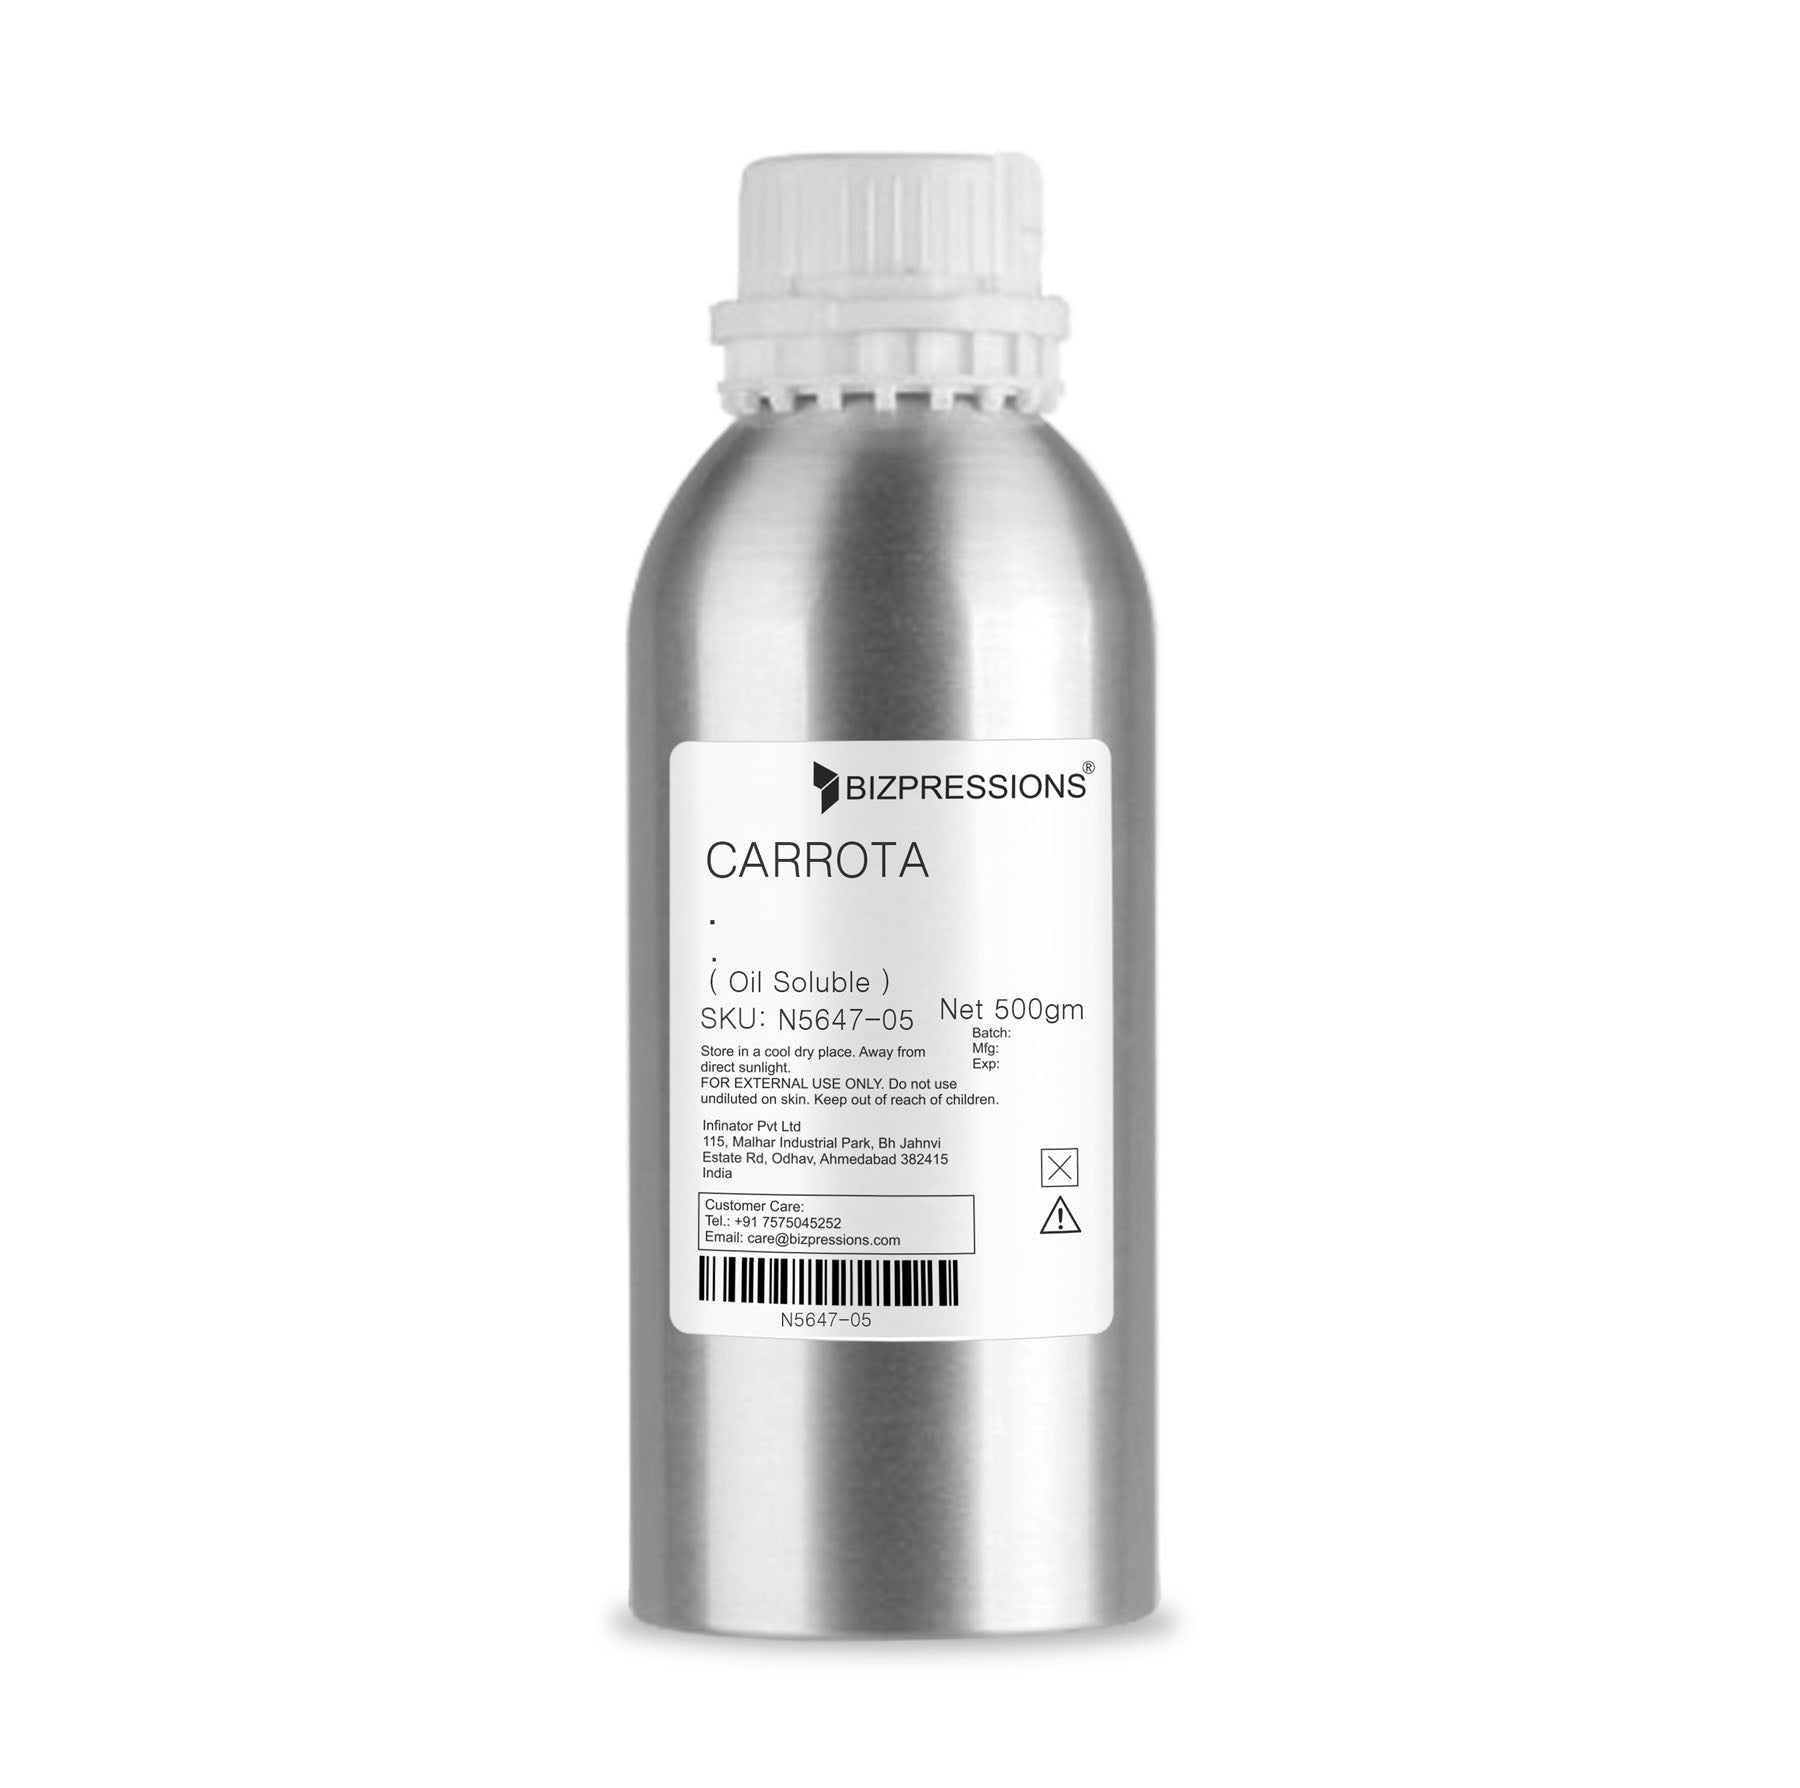 CARROTA - Fragrance ( Oil Soluble ) - 500 gm